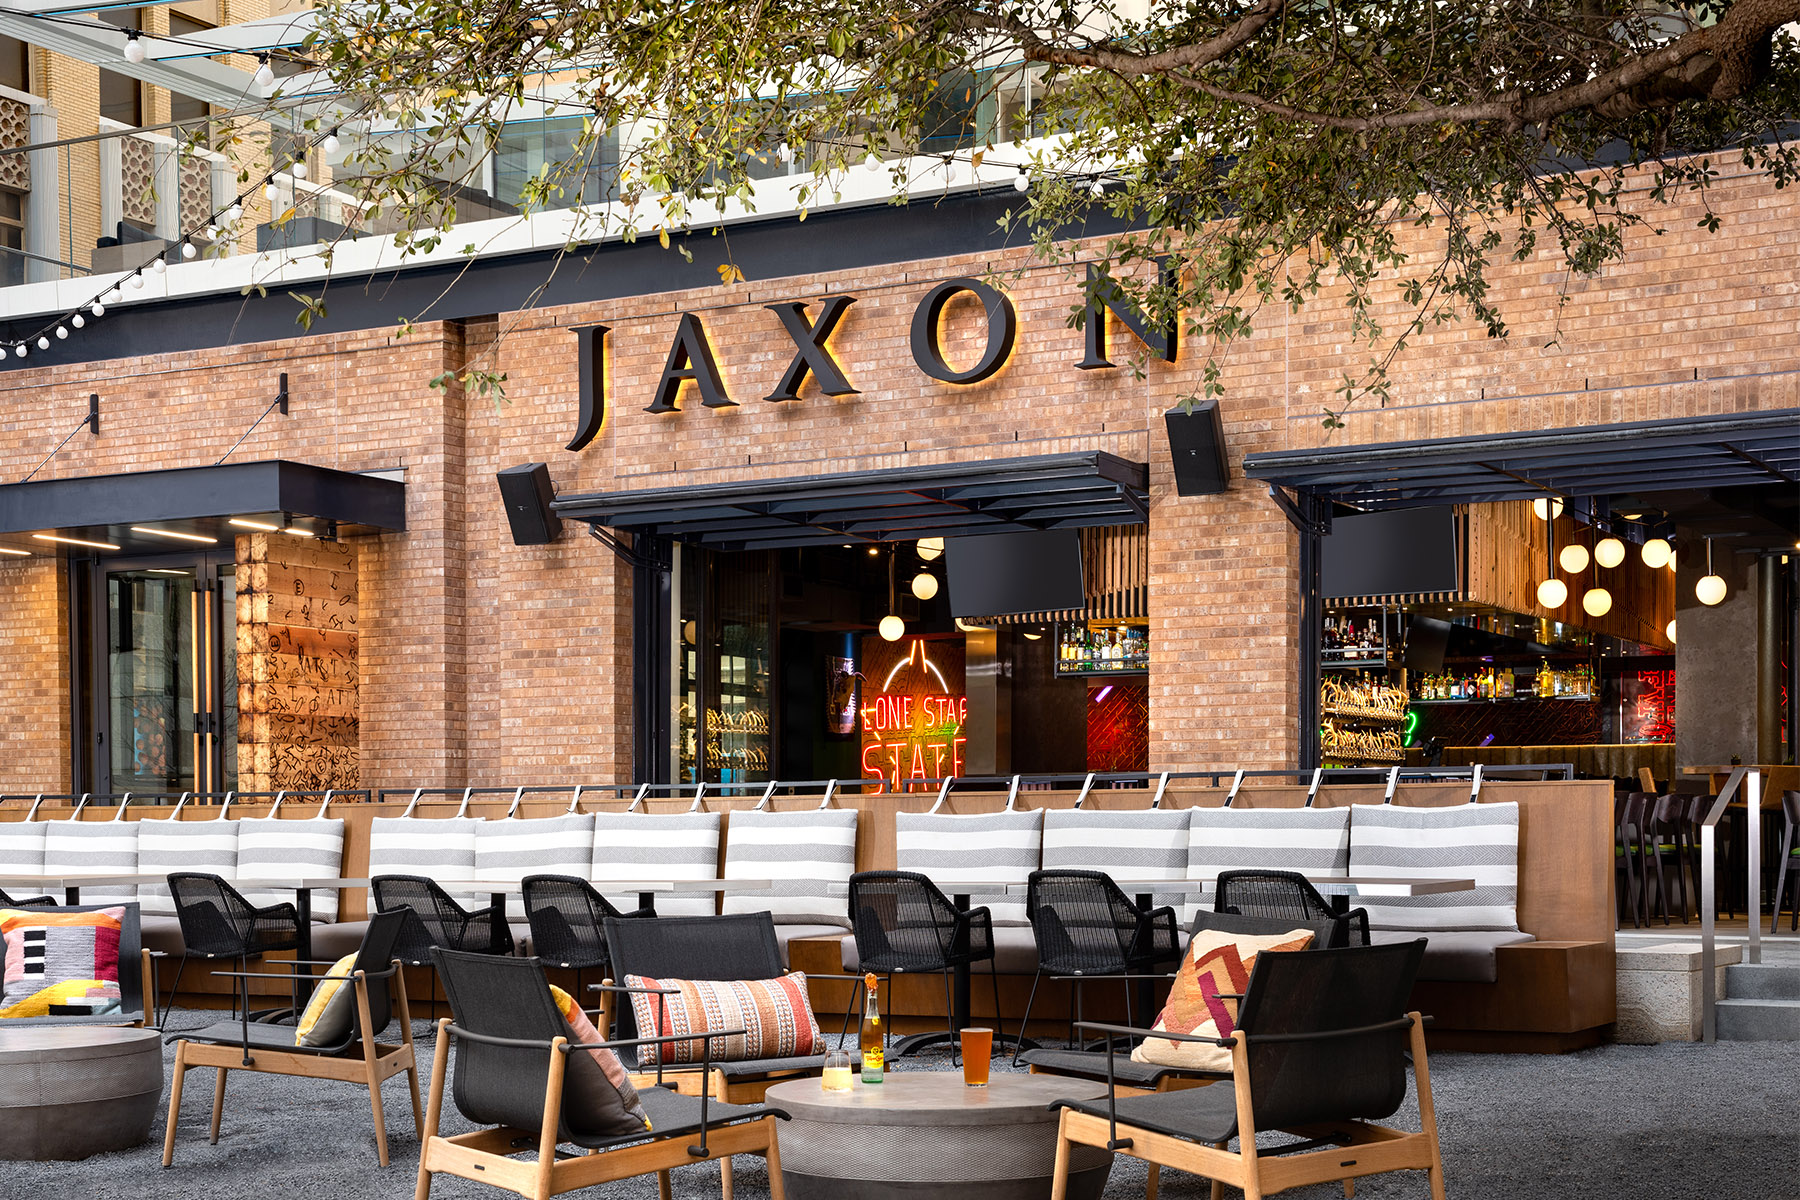 Jaxon Texas Kitchen & Beer Garden patio seating